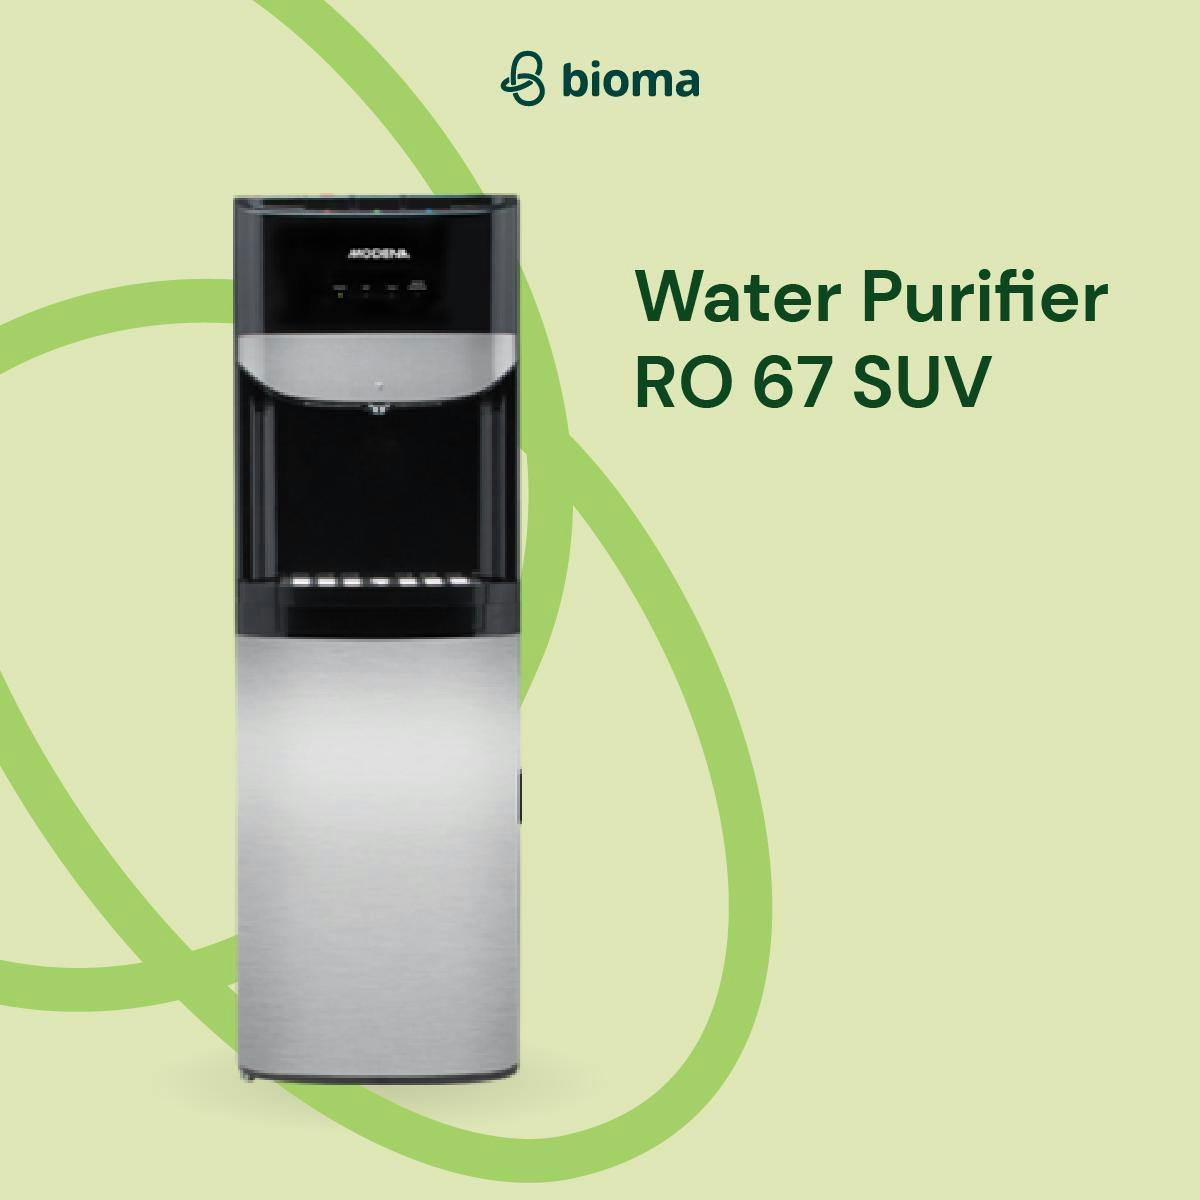 Water Purifier RO 67 SUV